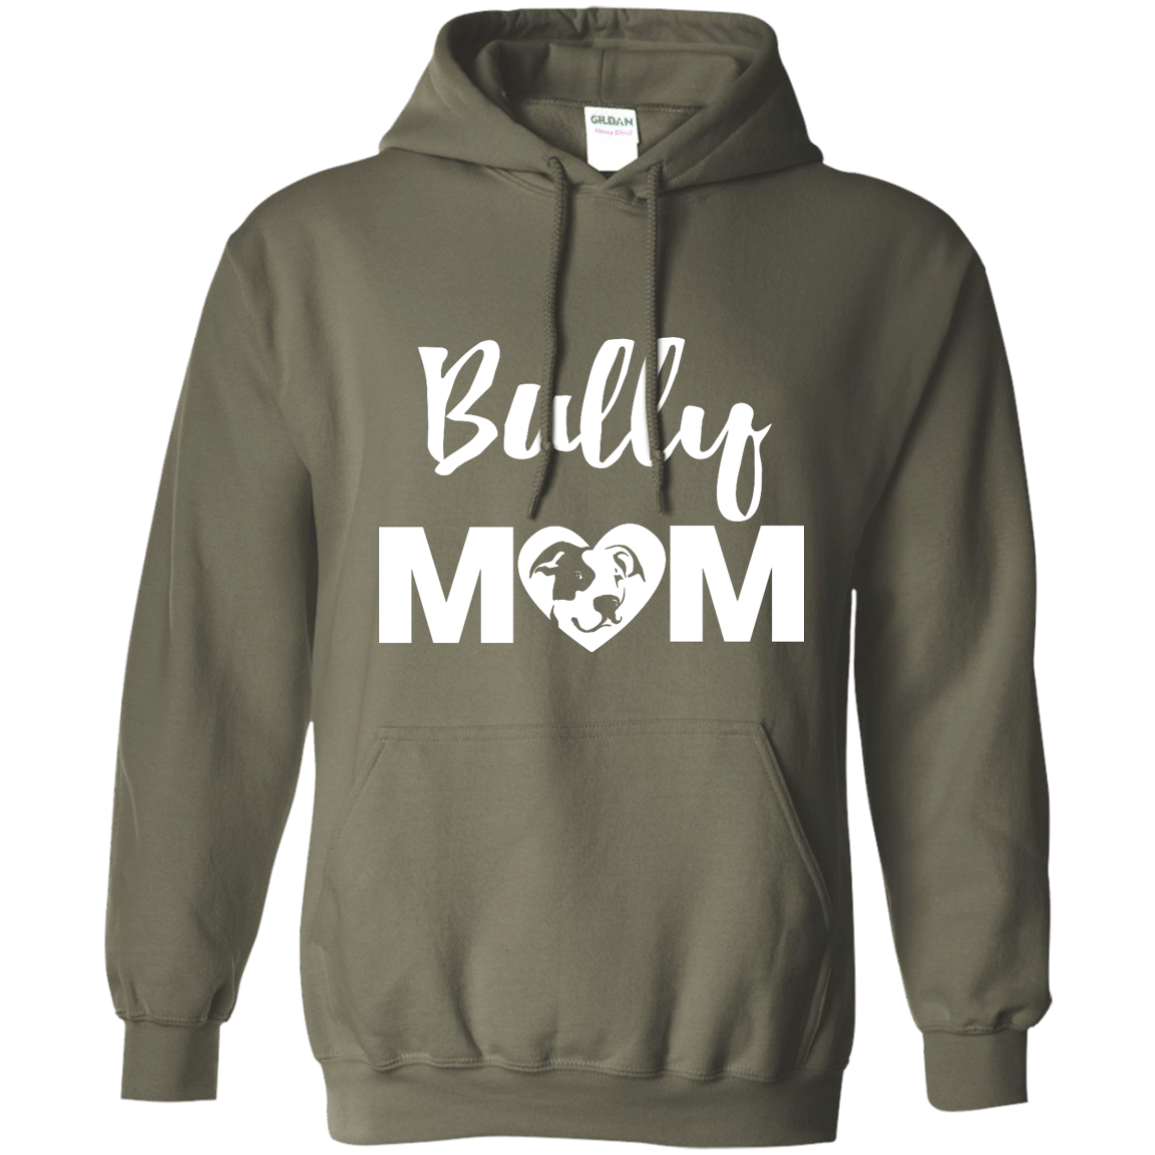 Bully Mom - Pitbull Terrier - Pullover Hoodie